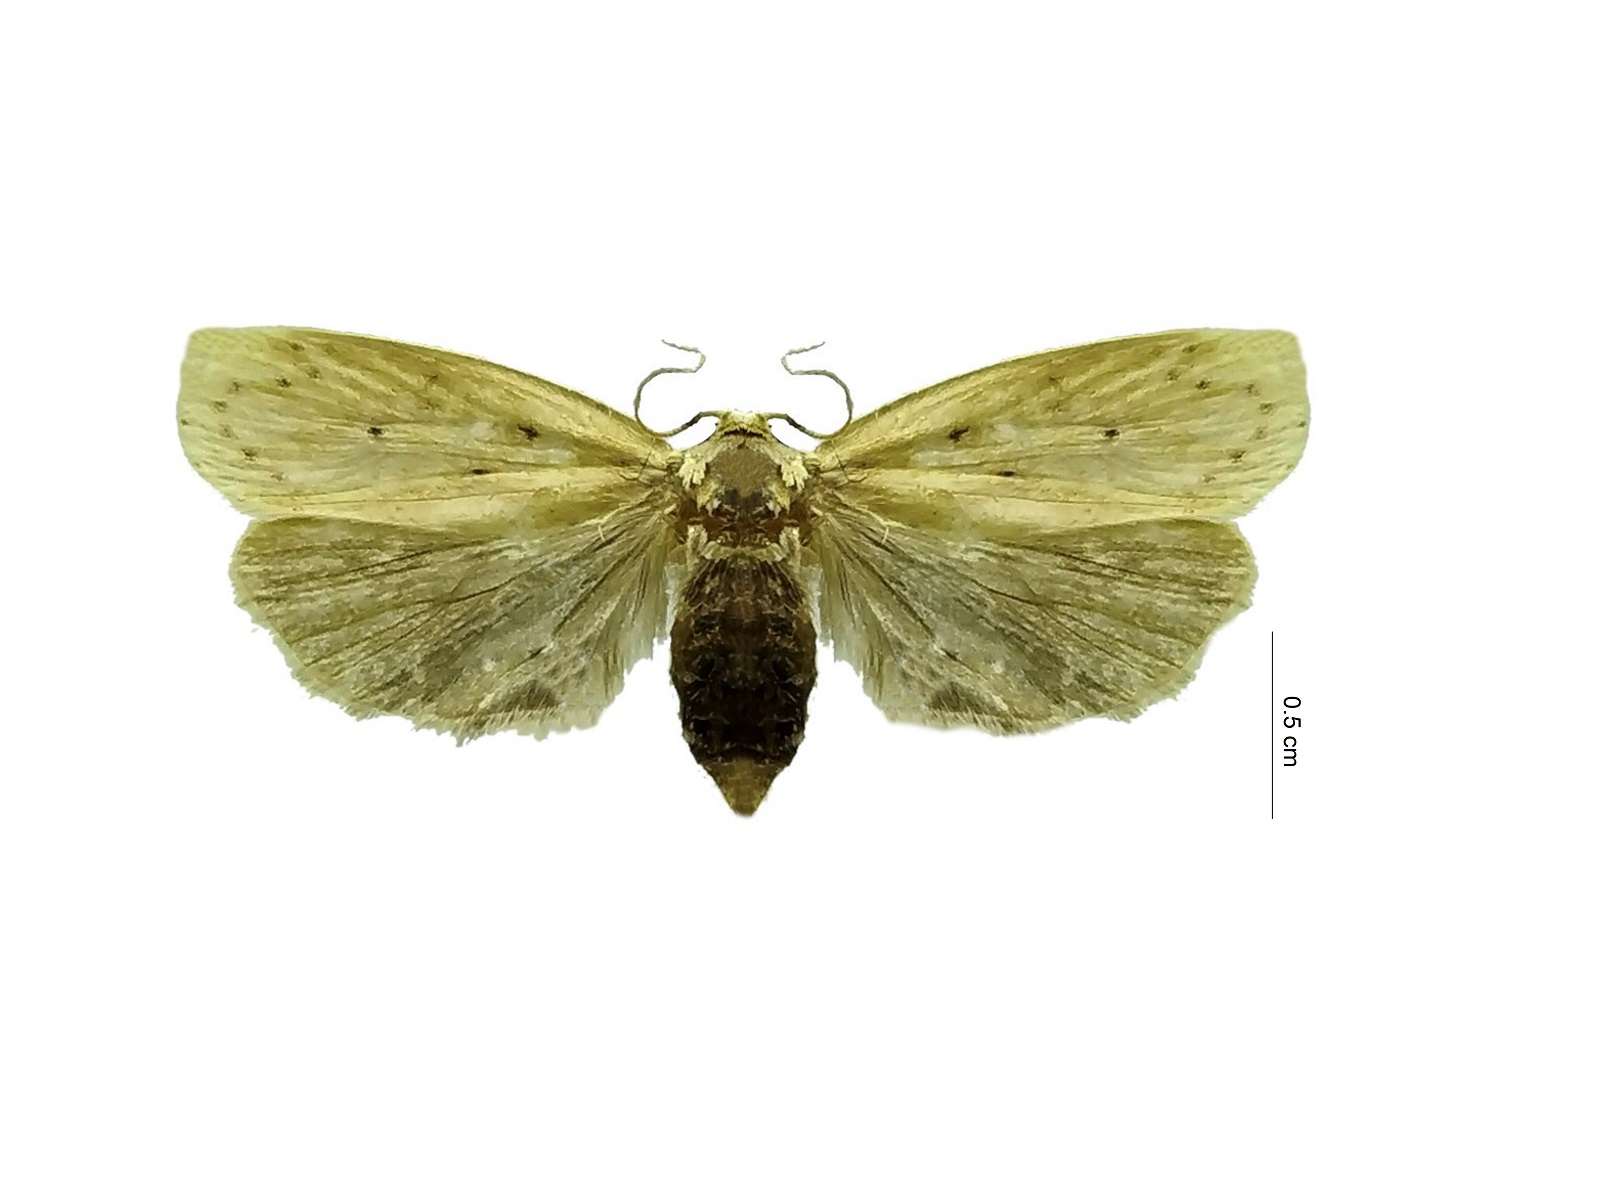 Stenoma catenifer Walsingham, 1912 